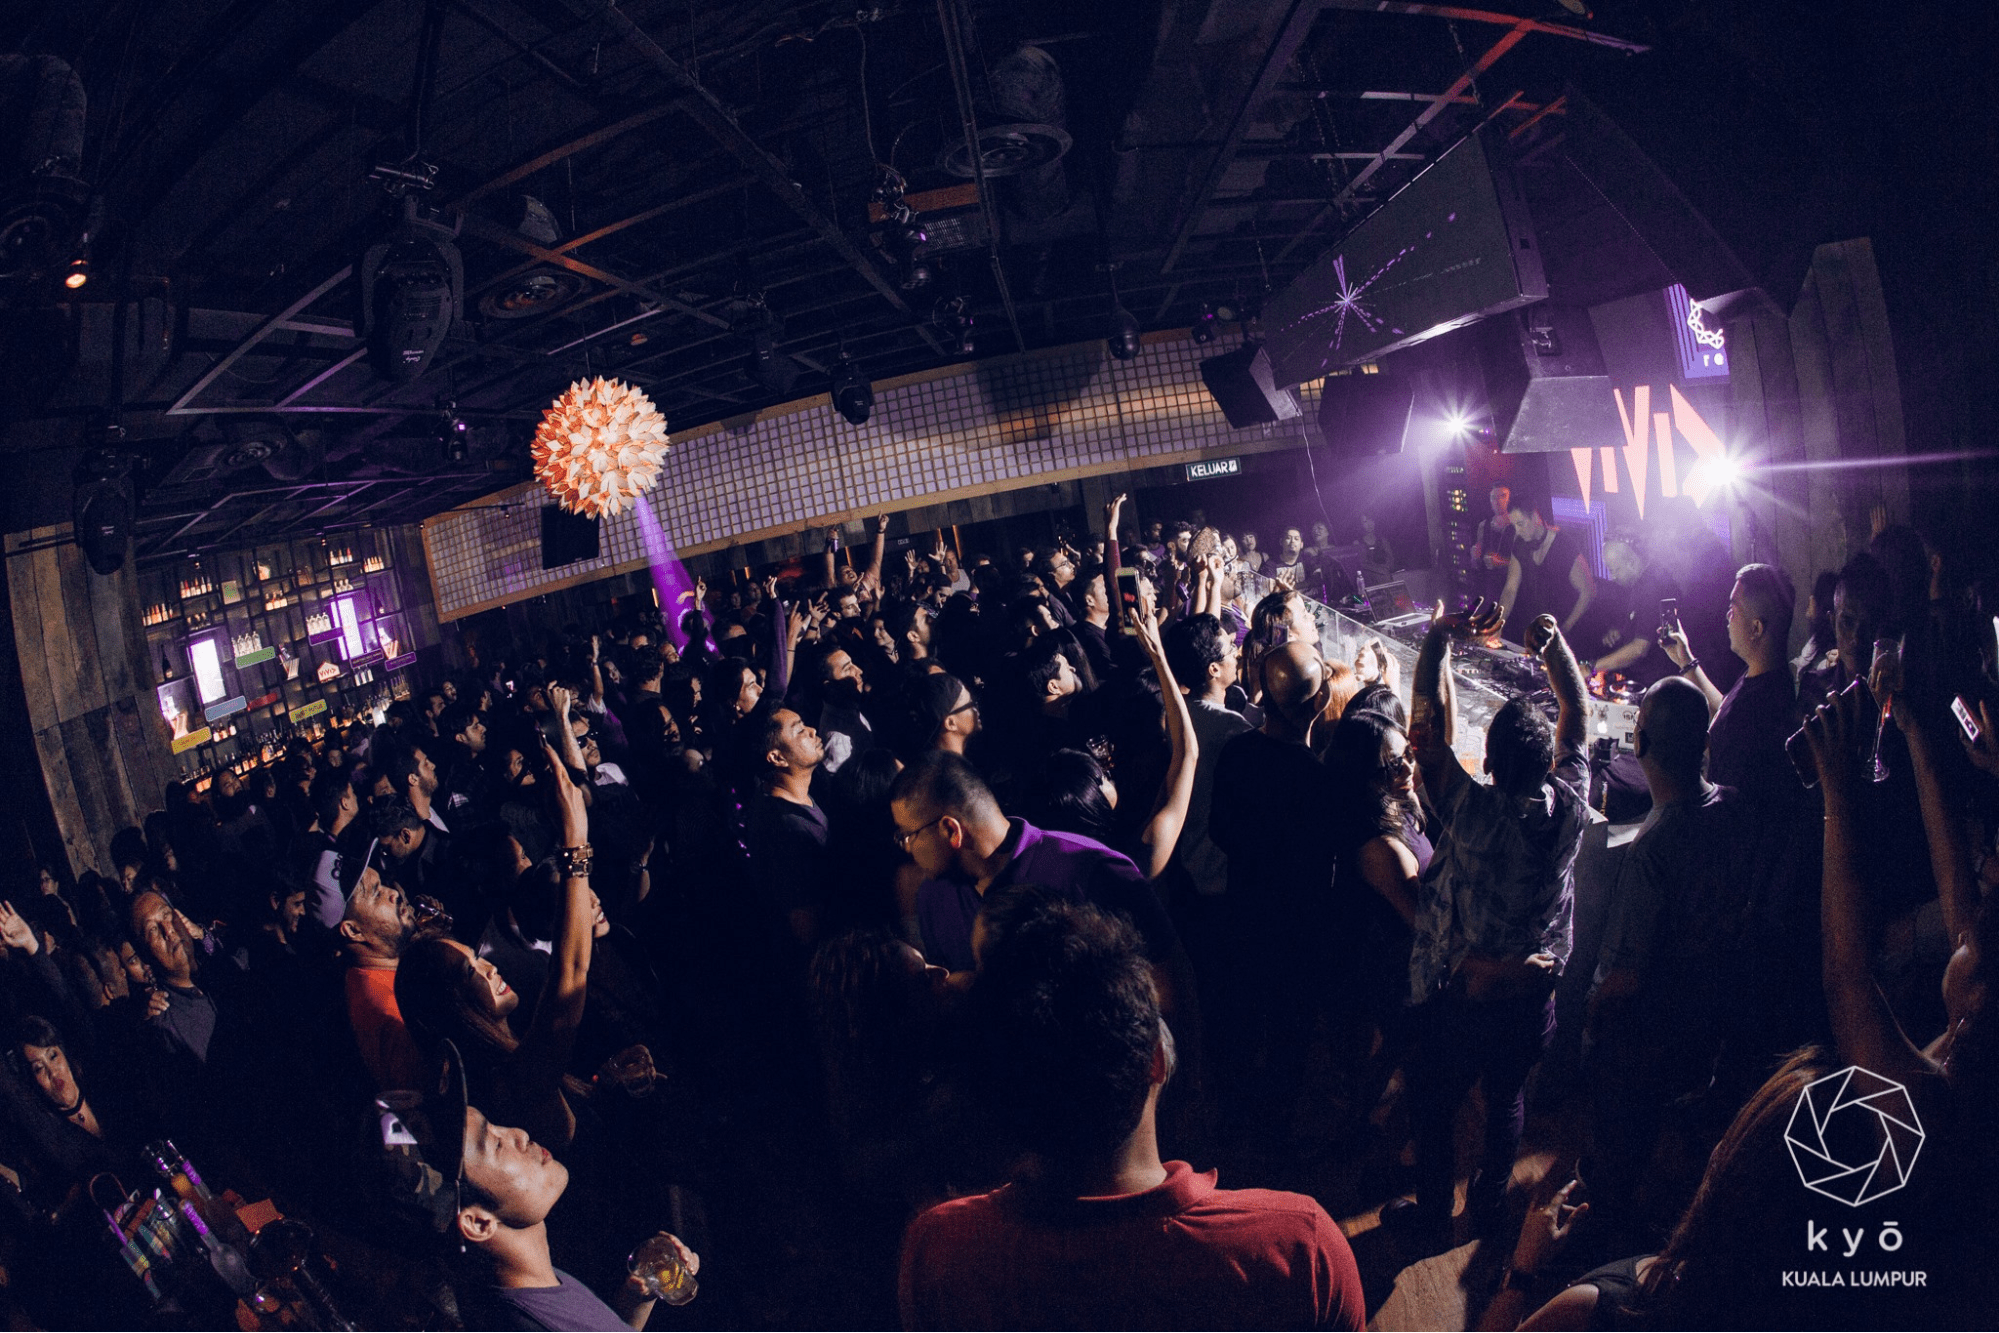 KL nightclubs (6) - Kyo DJ crowd